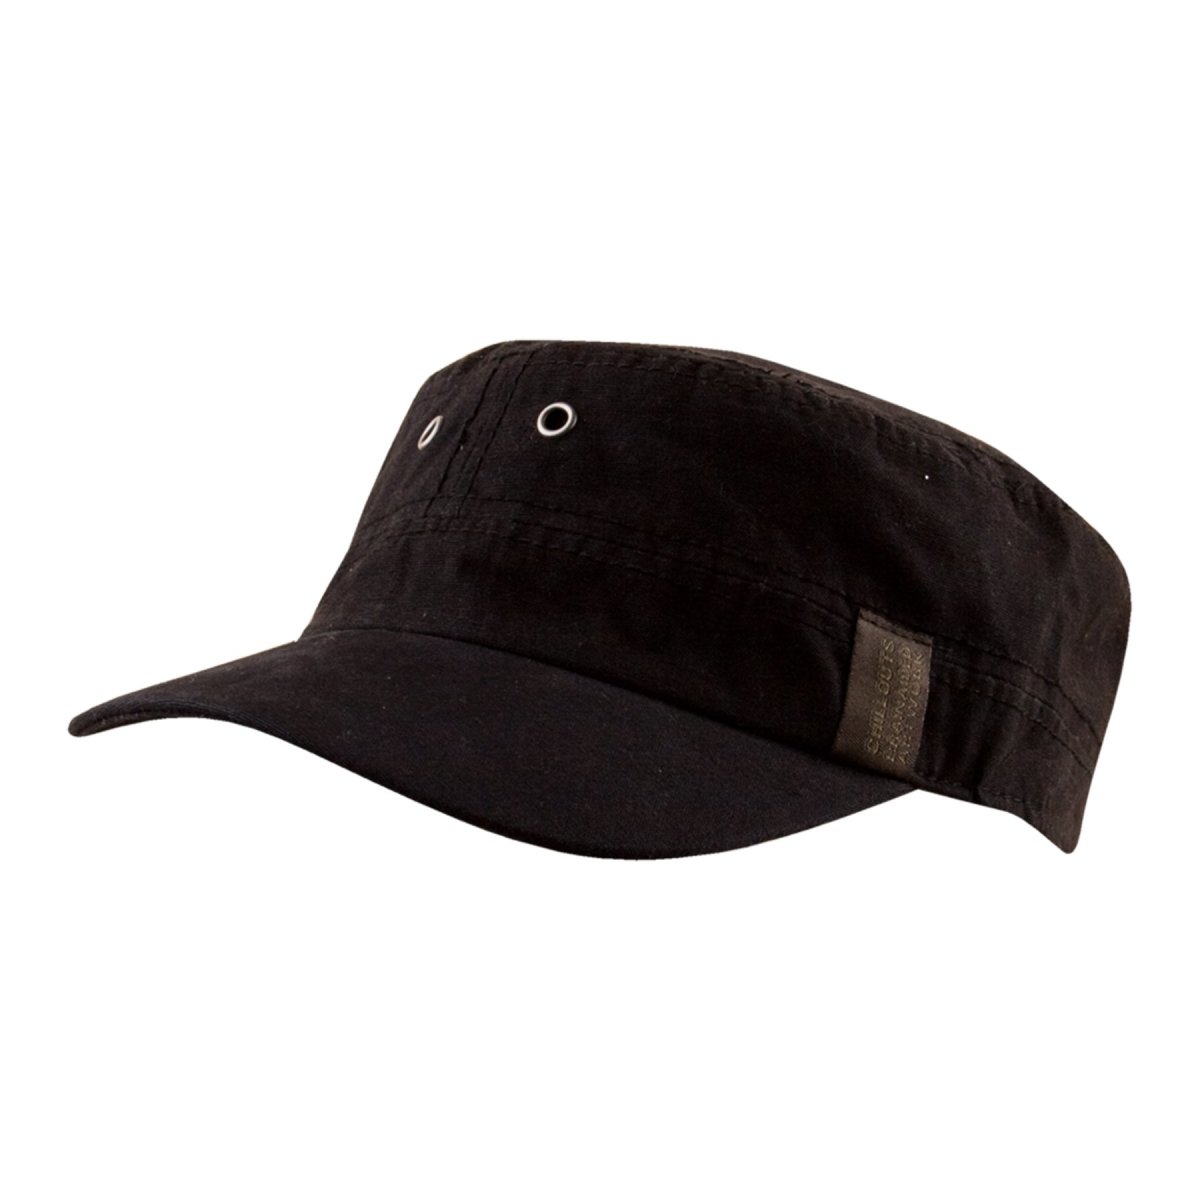 Cap kaufen! Headwear Chillouts - Military 100% Funktionale – Caps jetzt aus Baumwolle